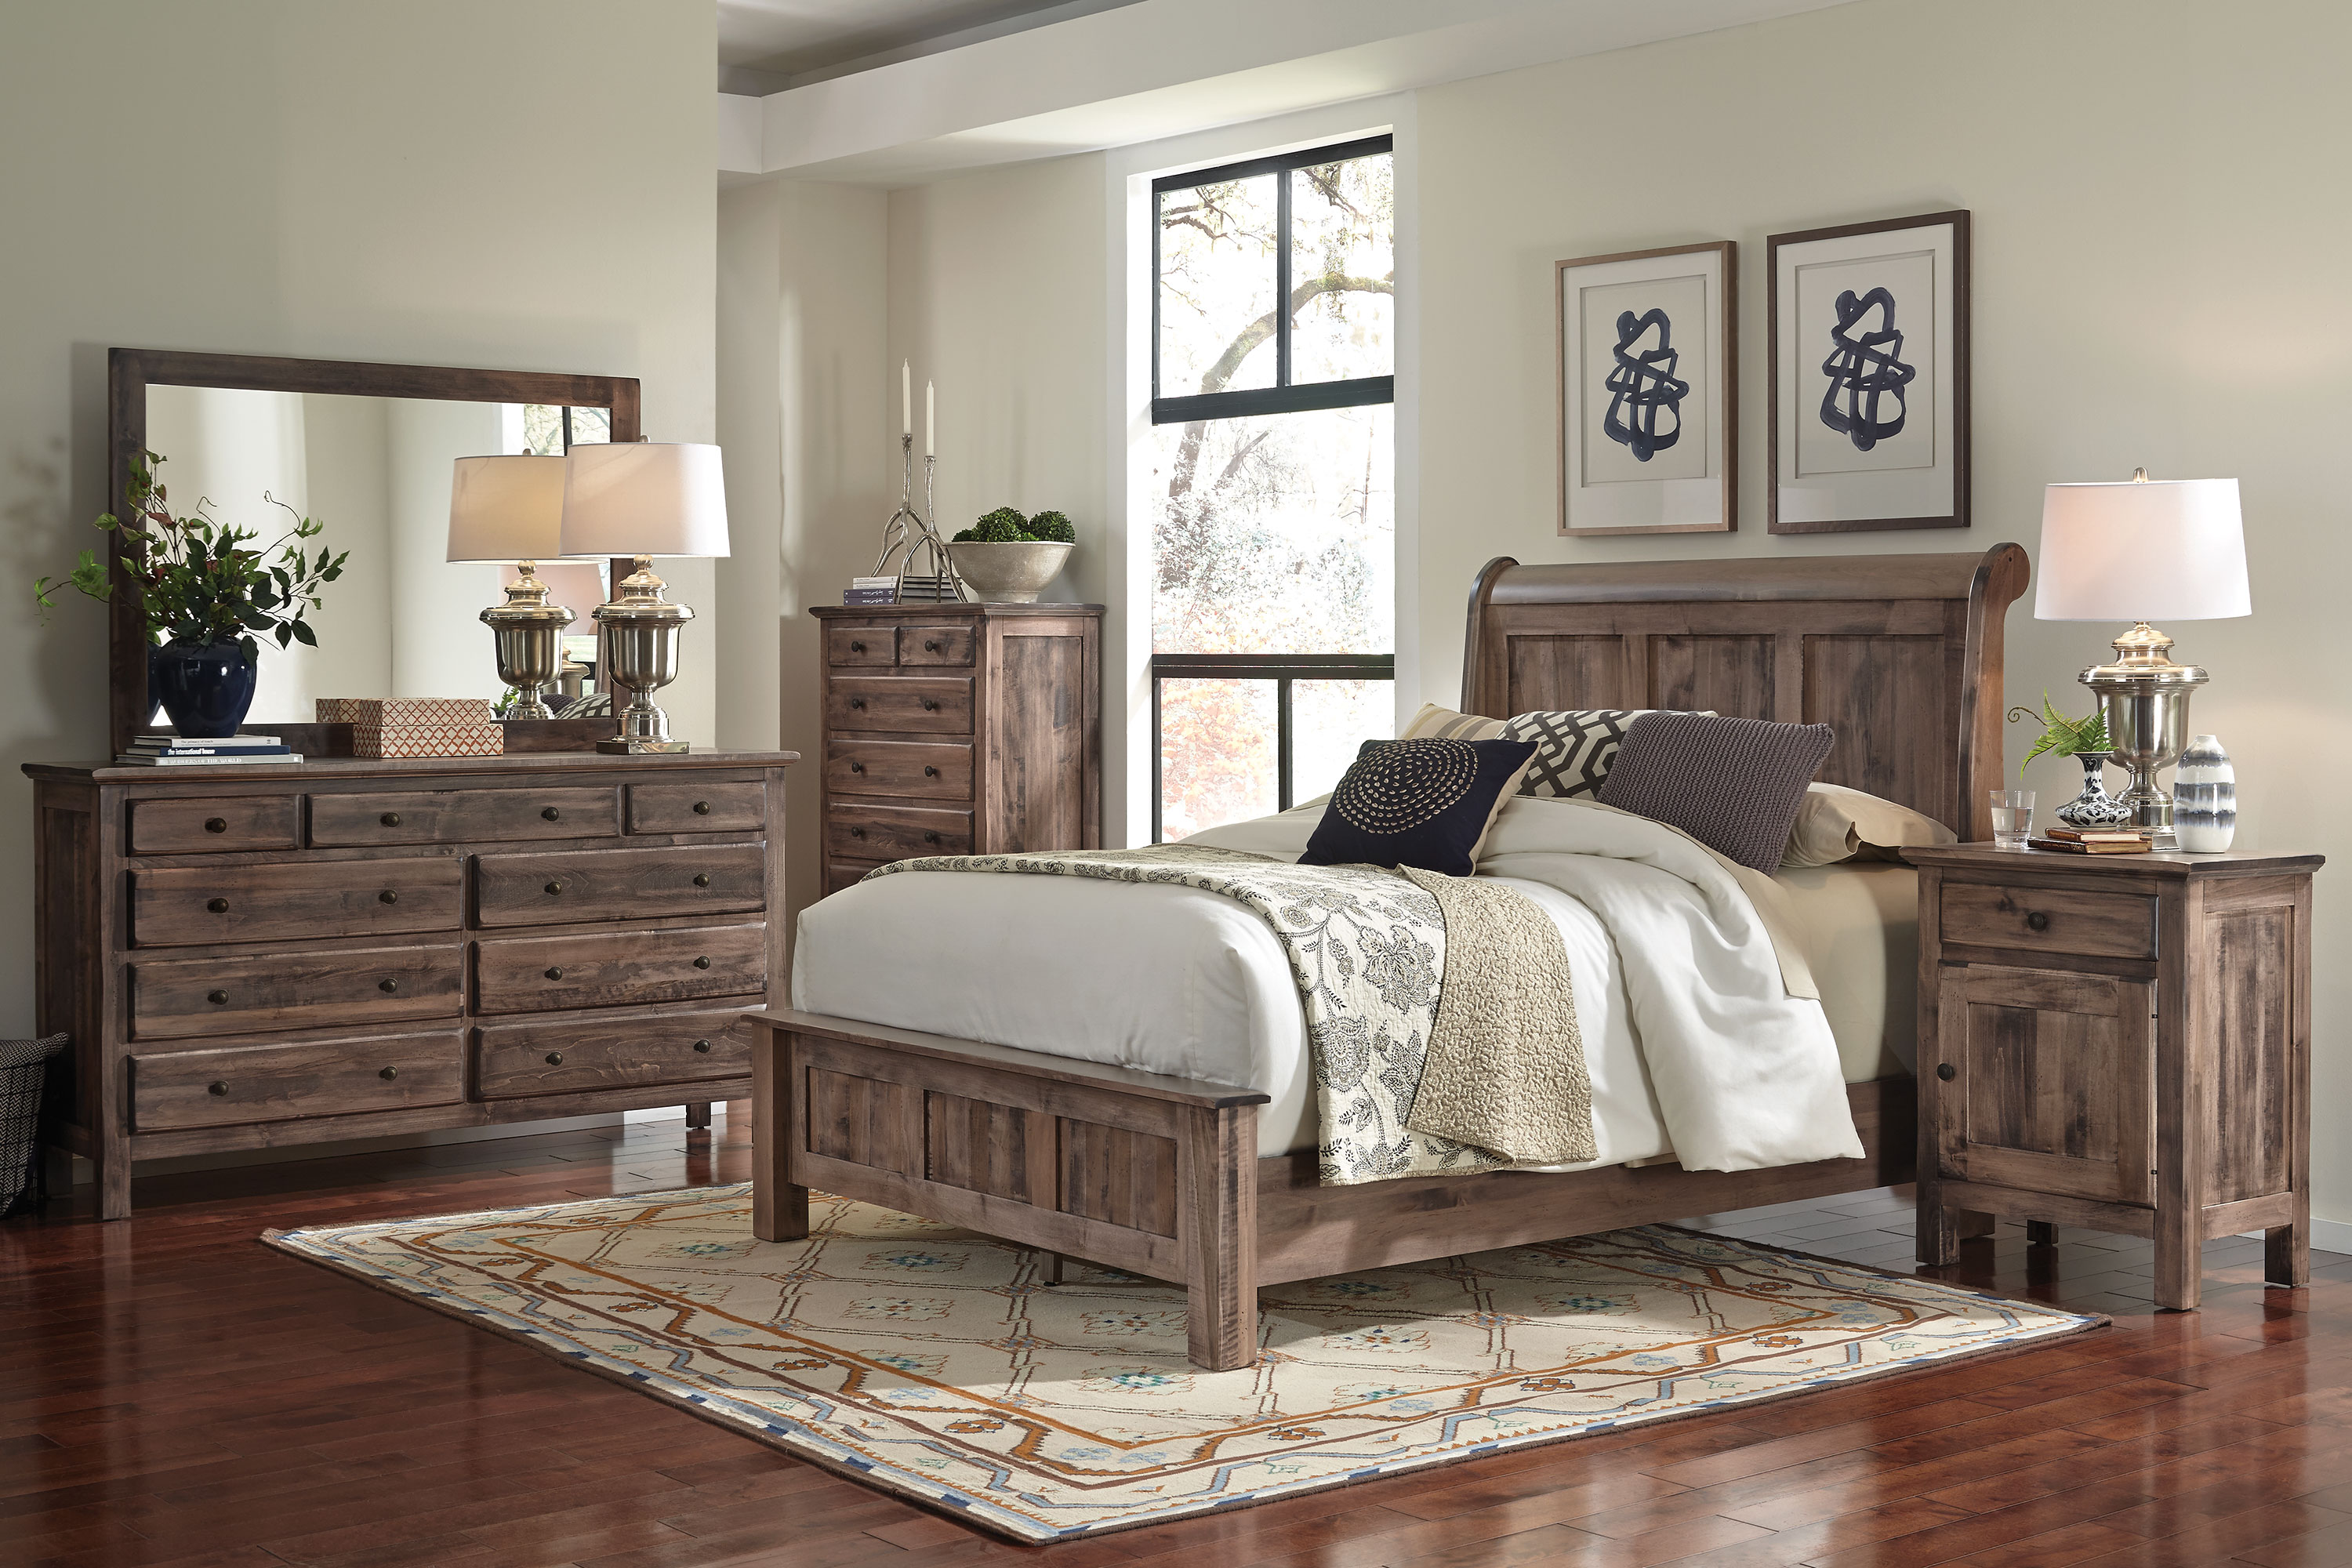 Levin Bedroom Furniture Bedroom Design Ideas